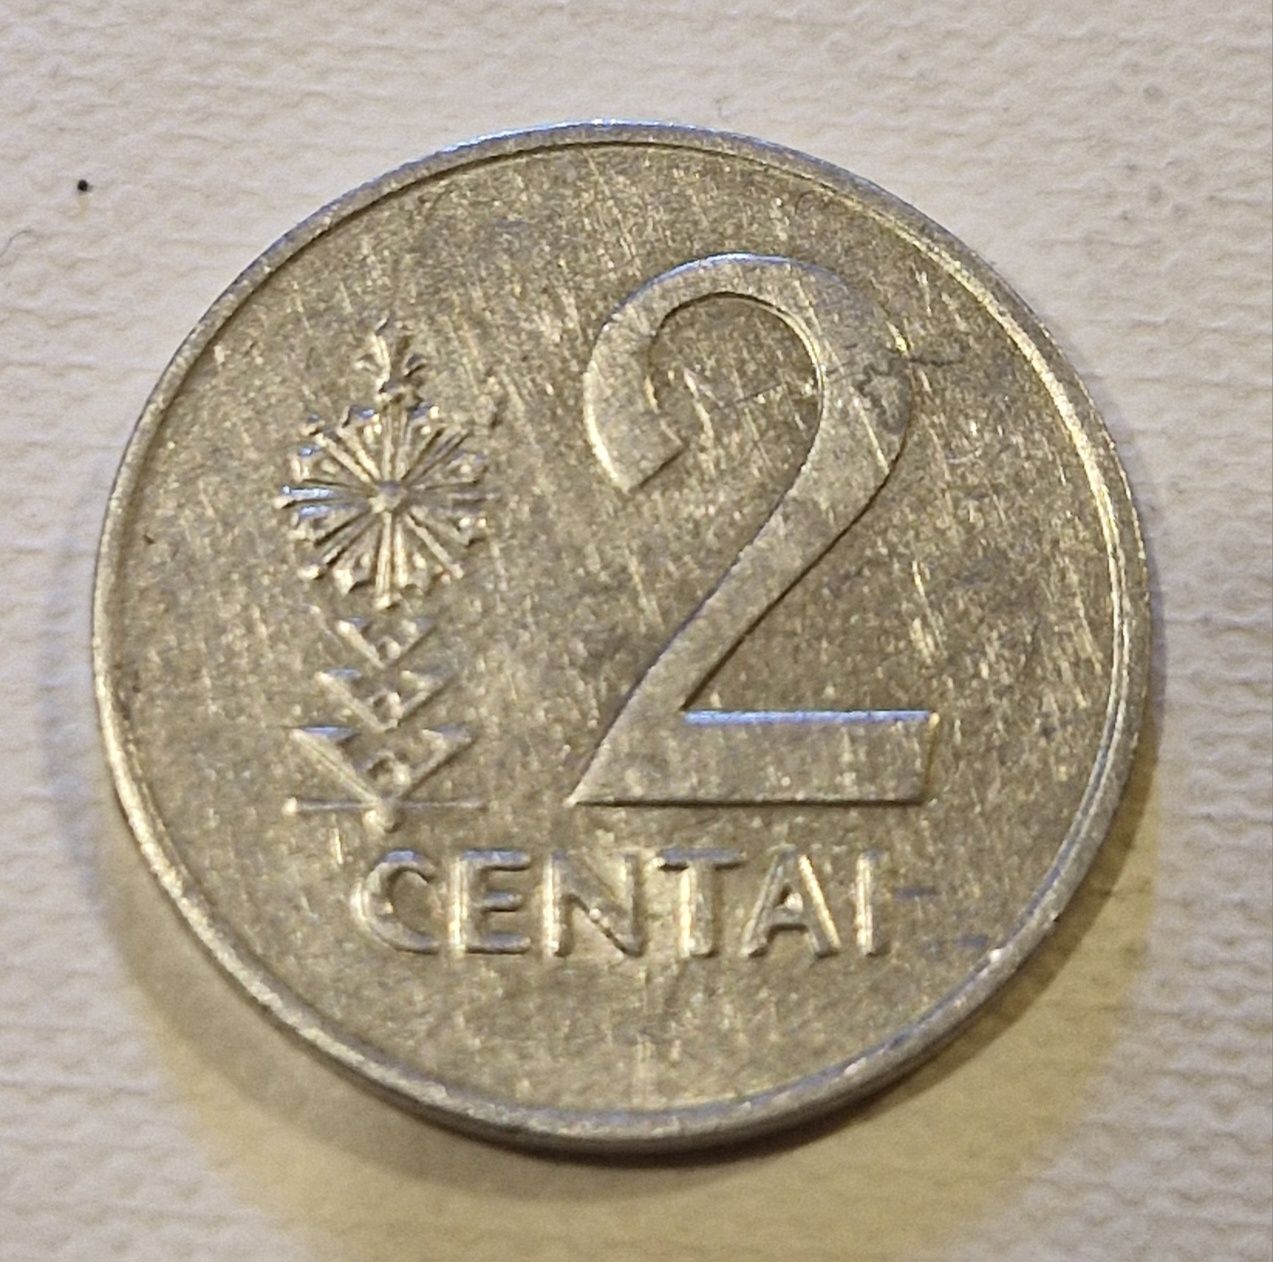 Moneta 2 centai Litwa.